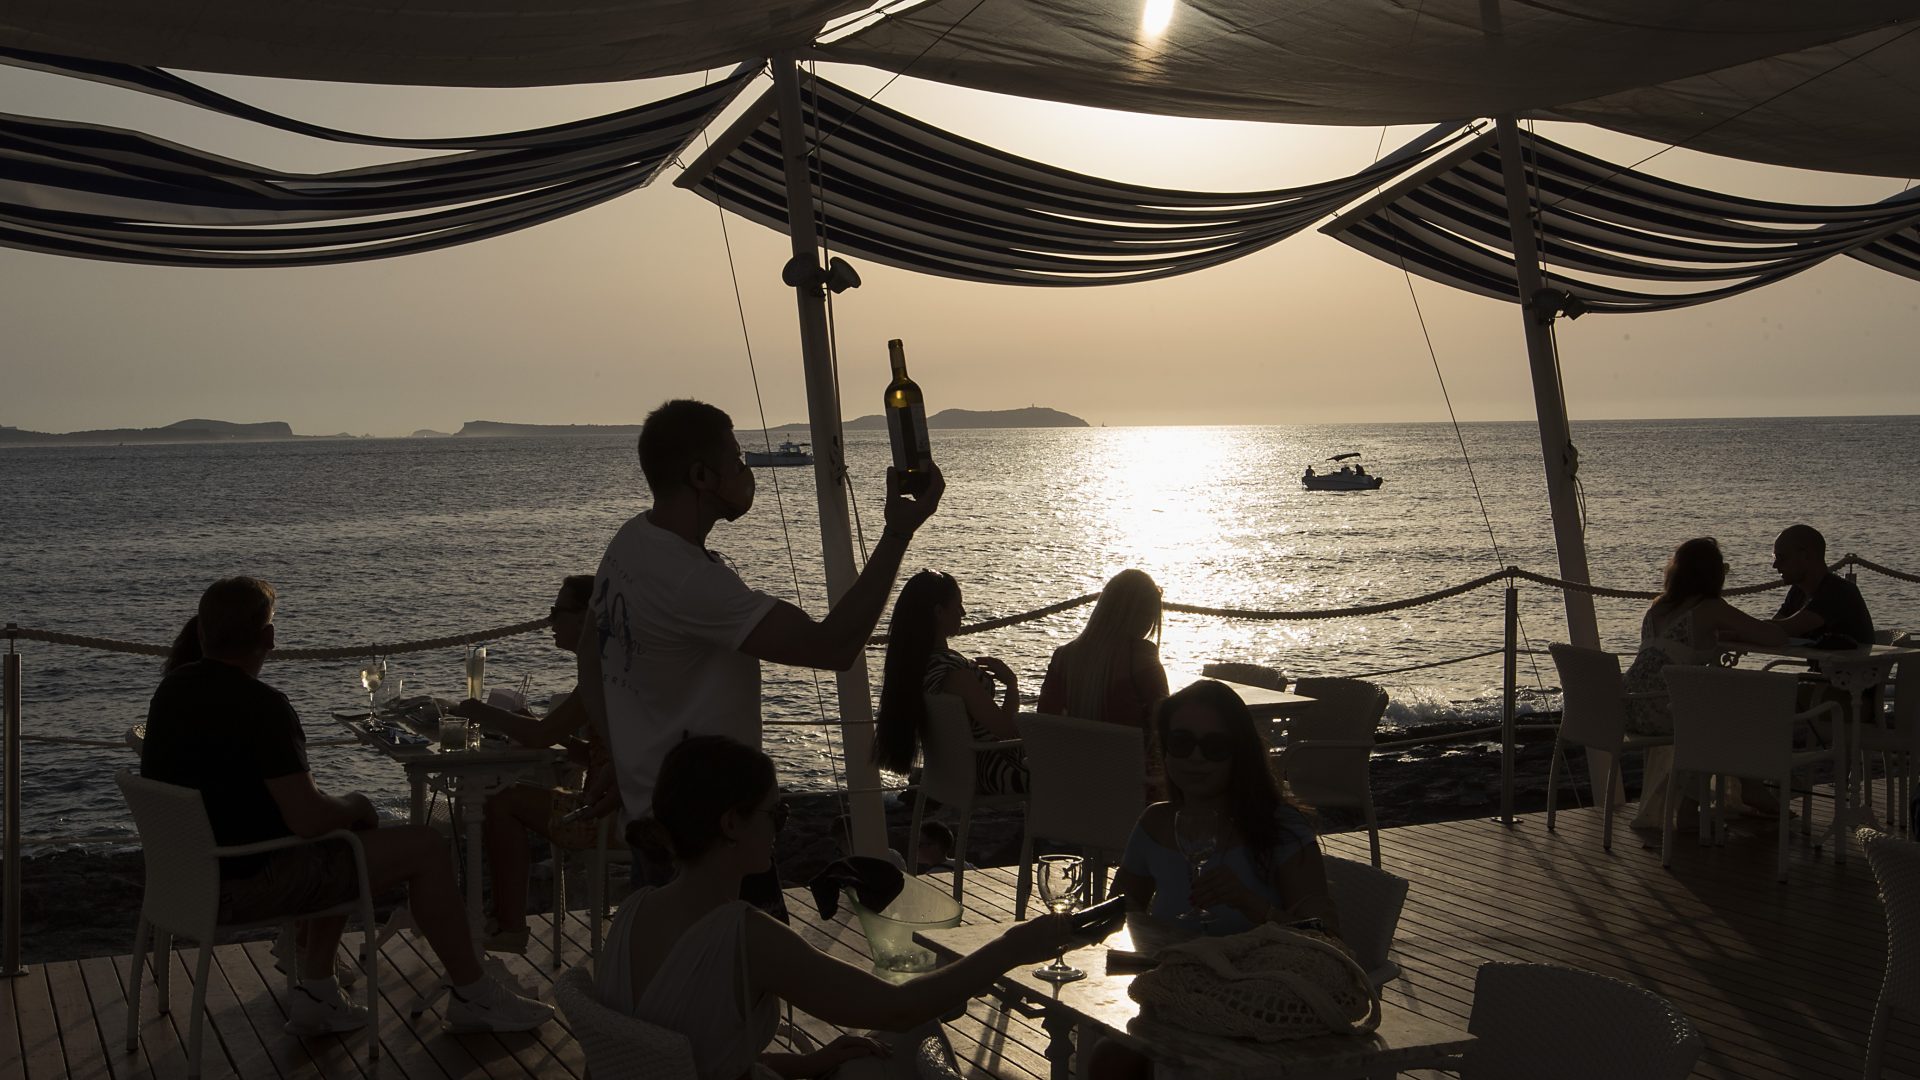 Tourists sit at the terrace bar "Cafe del Mar" in Sant Antoni de Portmany, Ibiza, on July 30, 2020. Photo: JAIME REINA/AFP via Getty Images